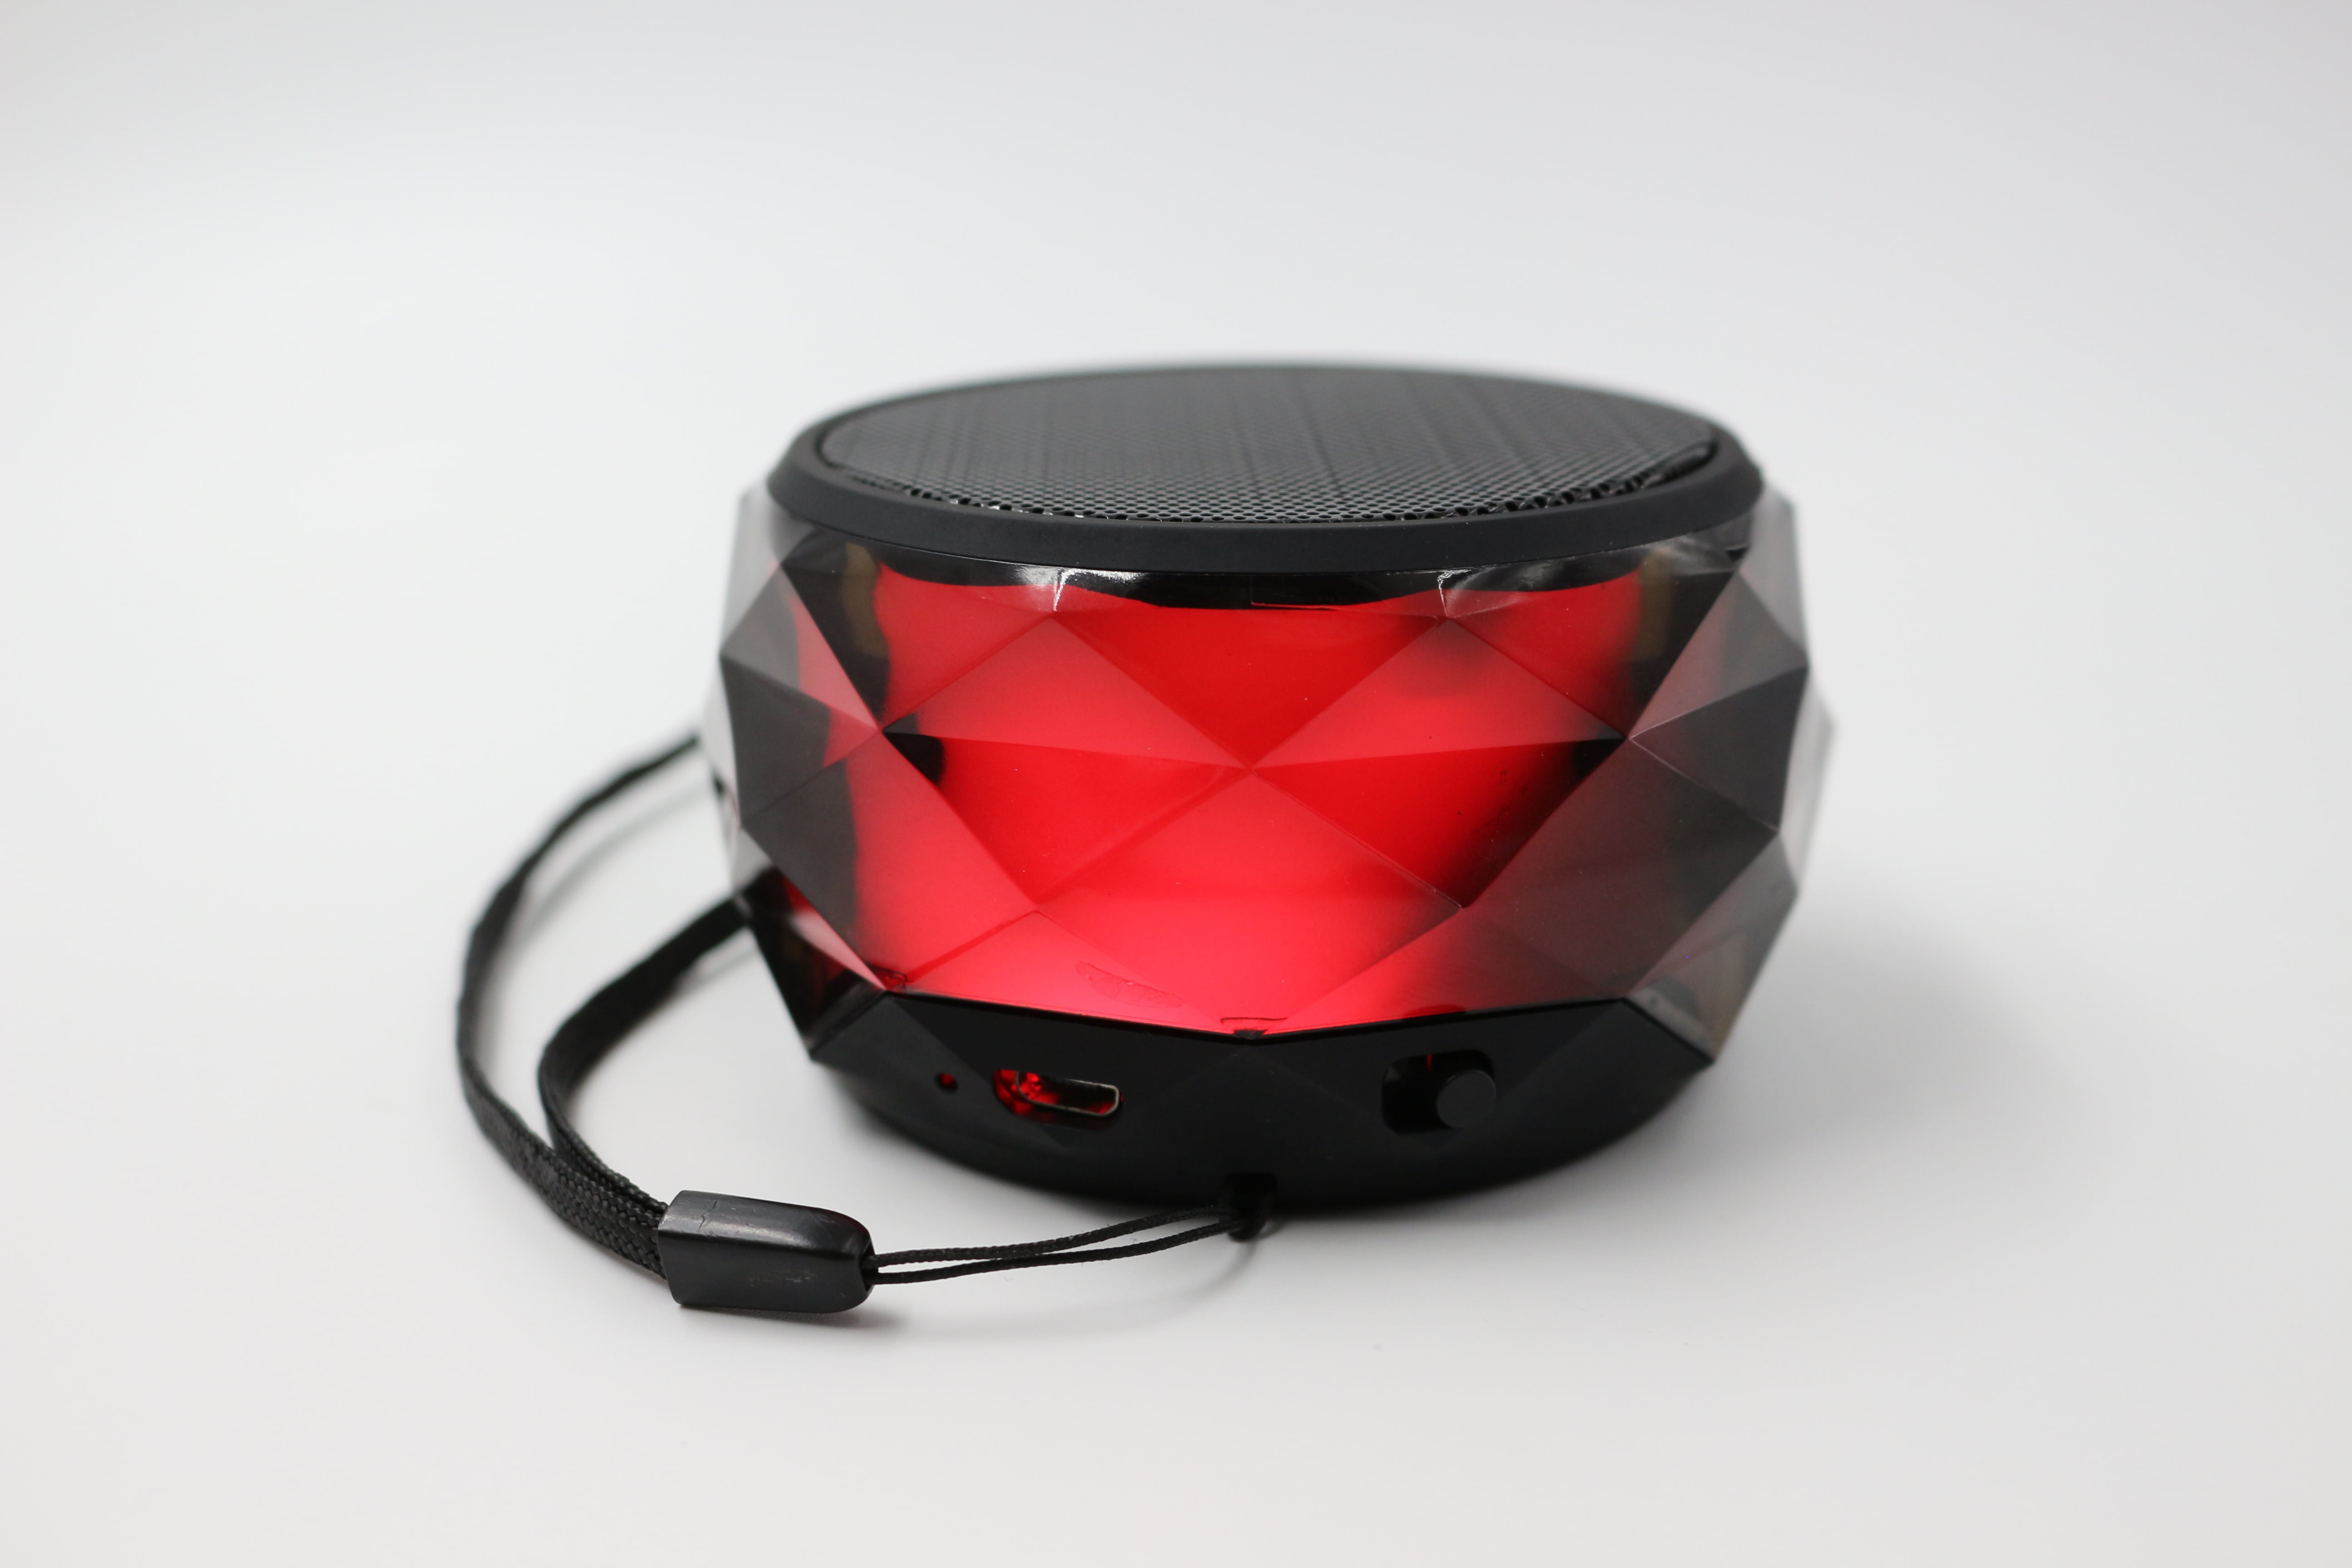 prism beats bluetooth speaker